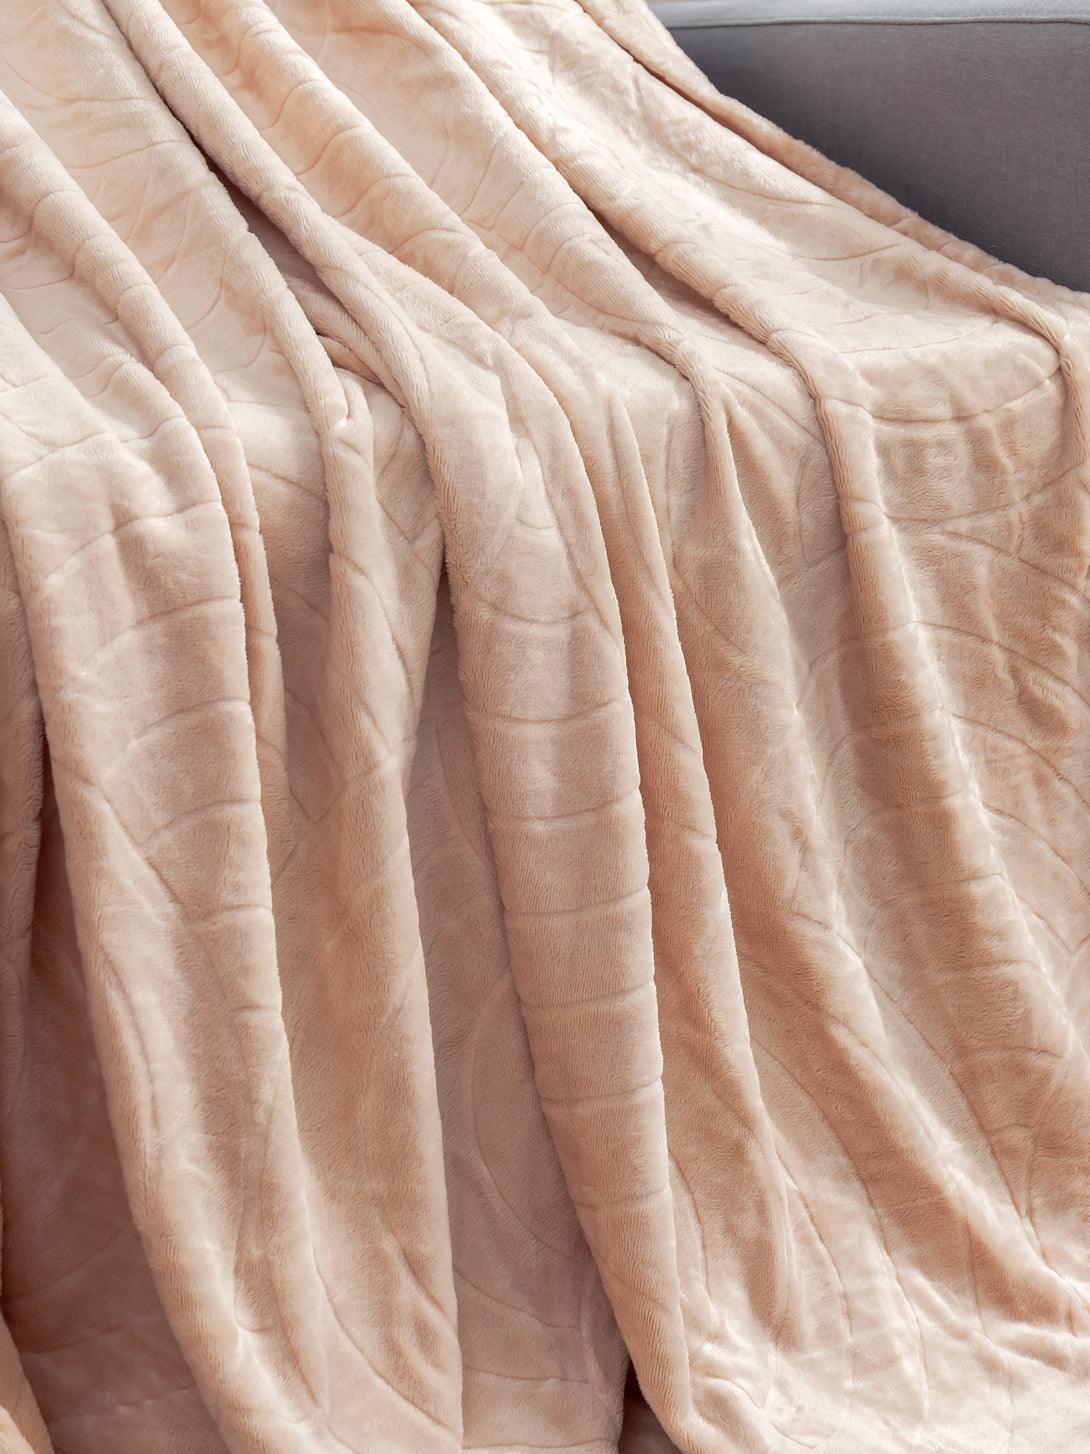 Flannel Fleece Blanket-Rose Pink